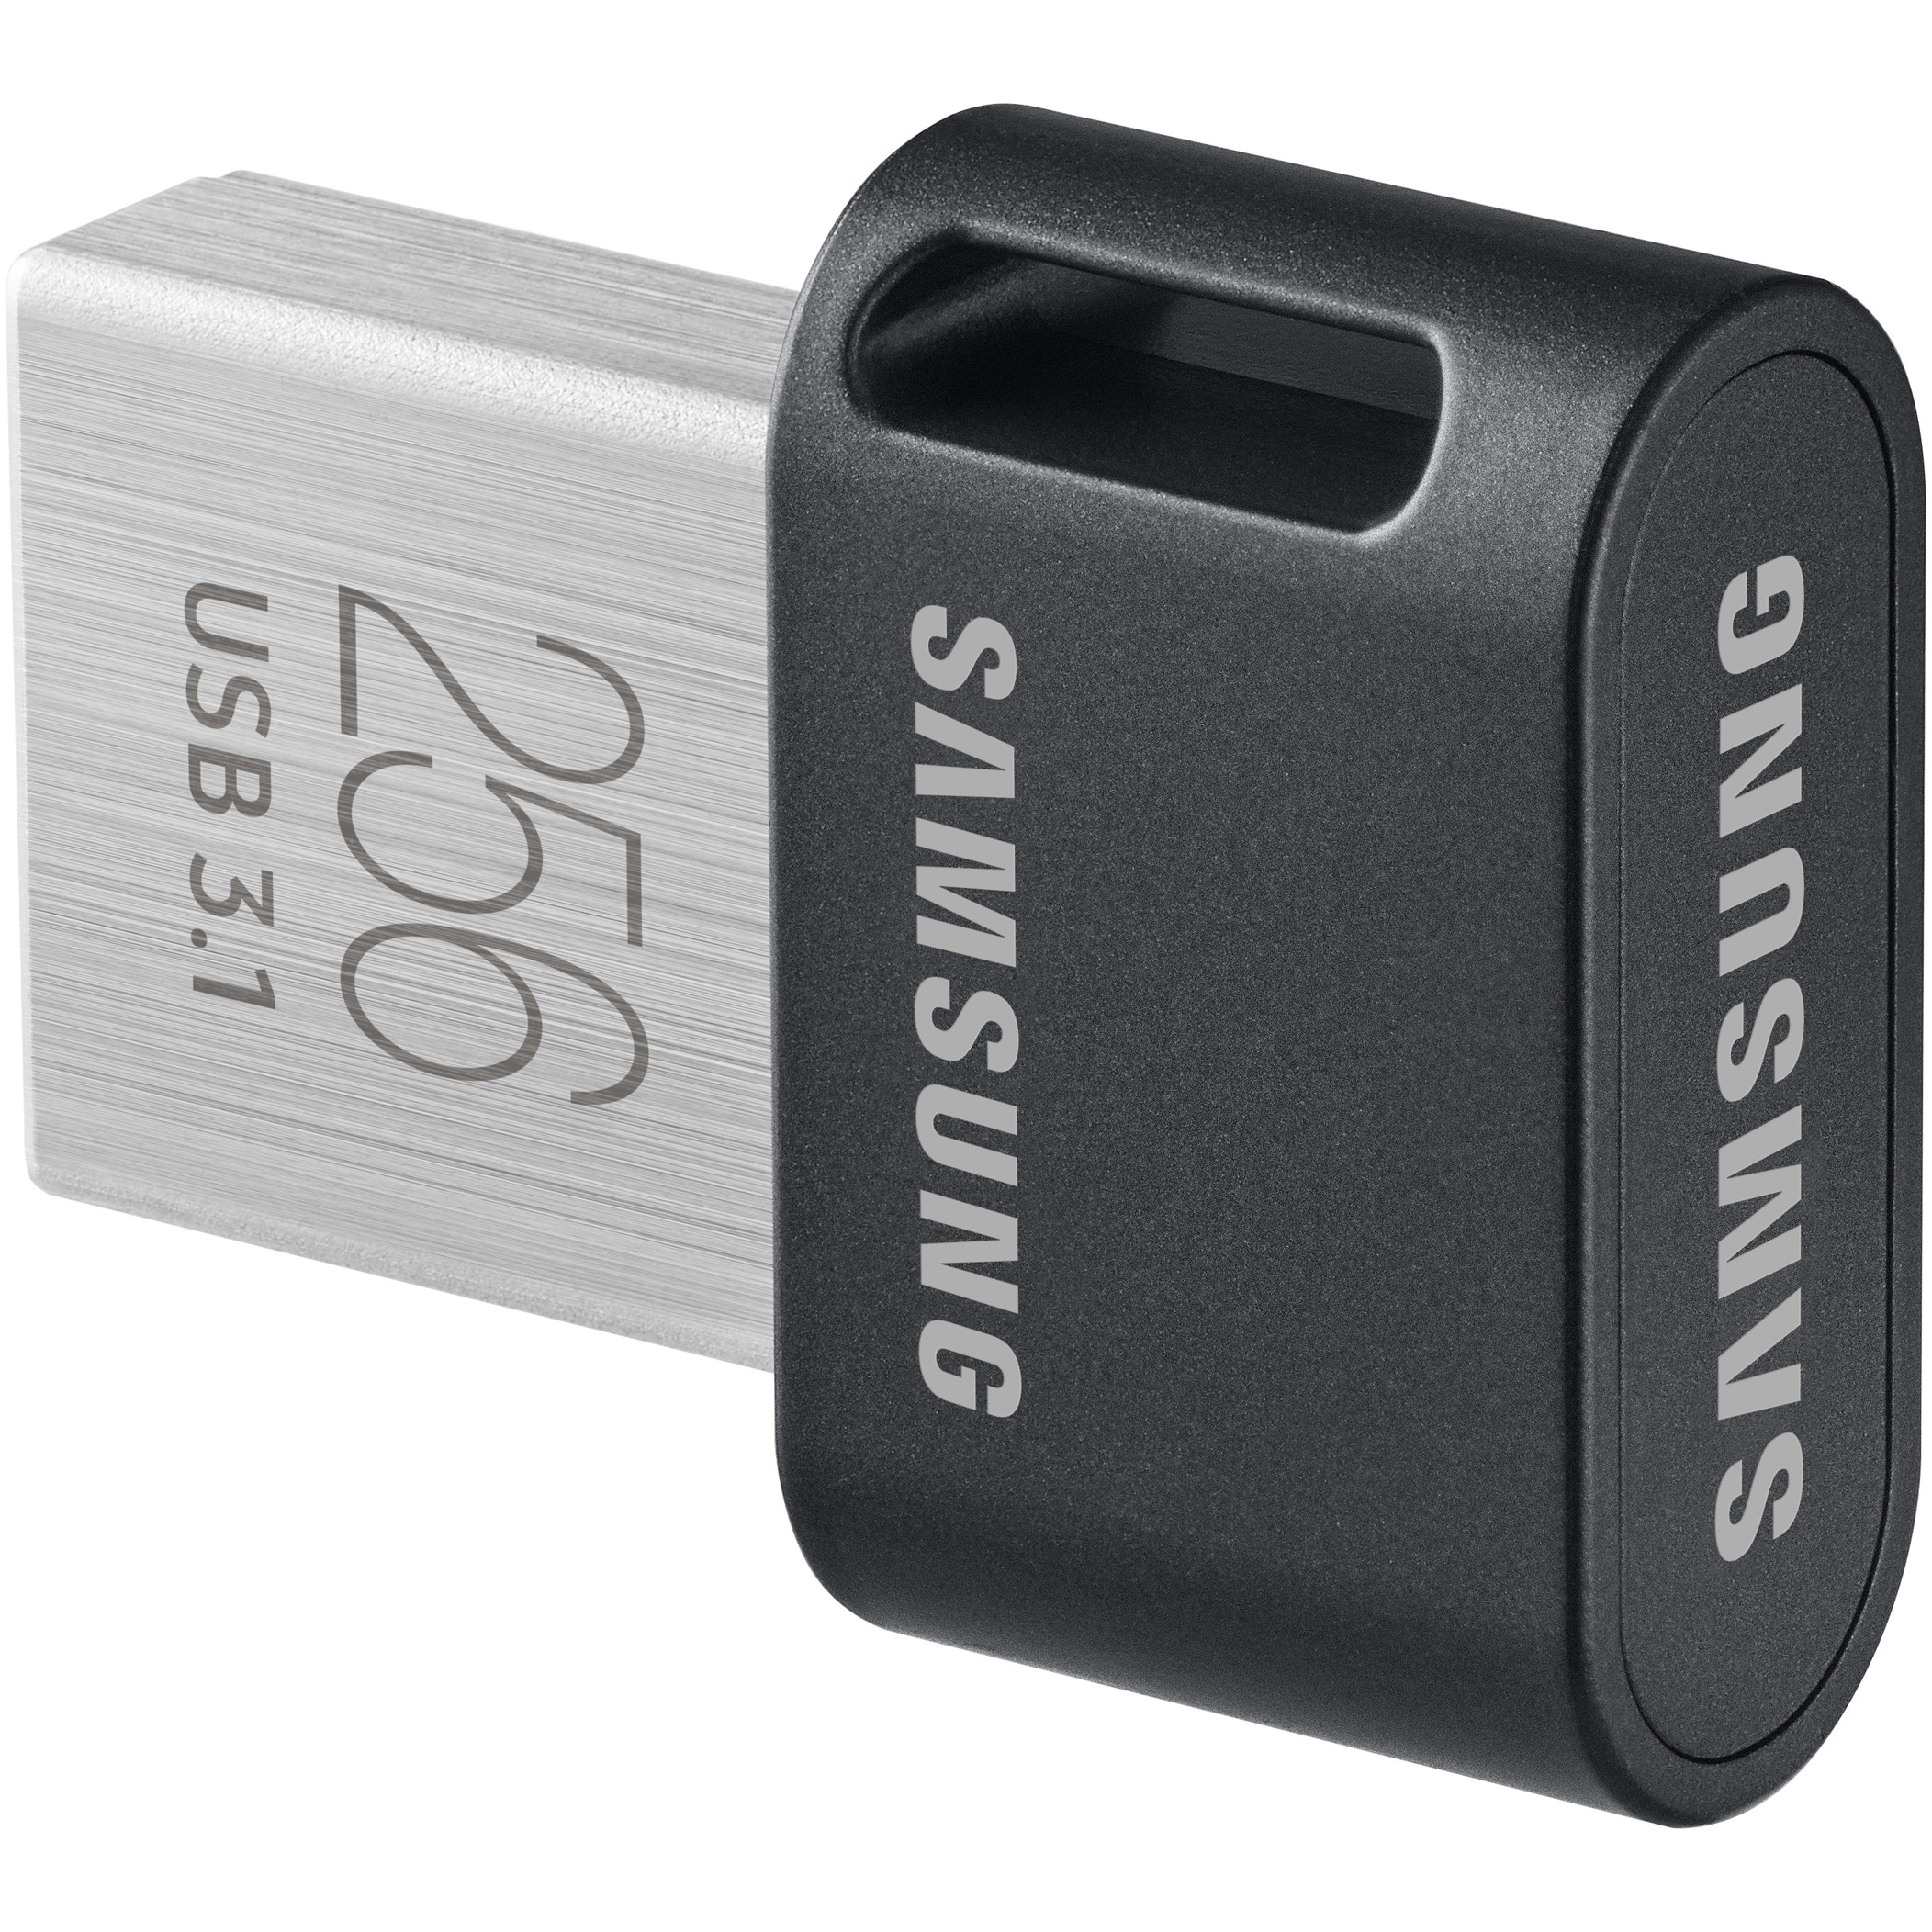 SAMSUNG MUF-256AB/APC, USB-Stick, Samsung MUF-256AB USB  (BILD3)